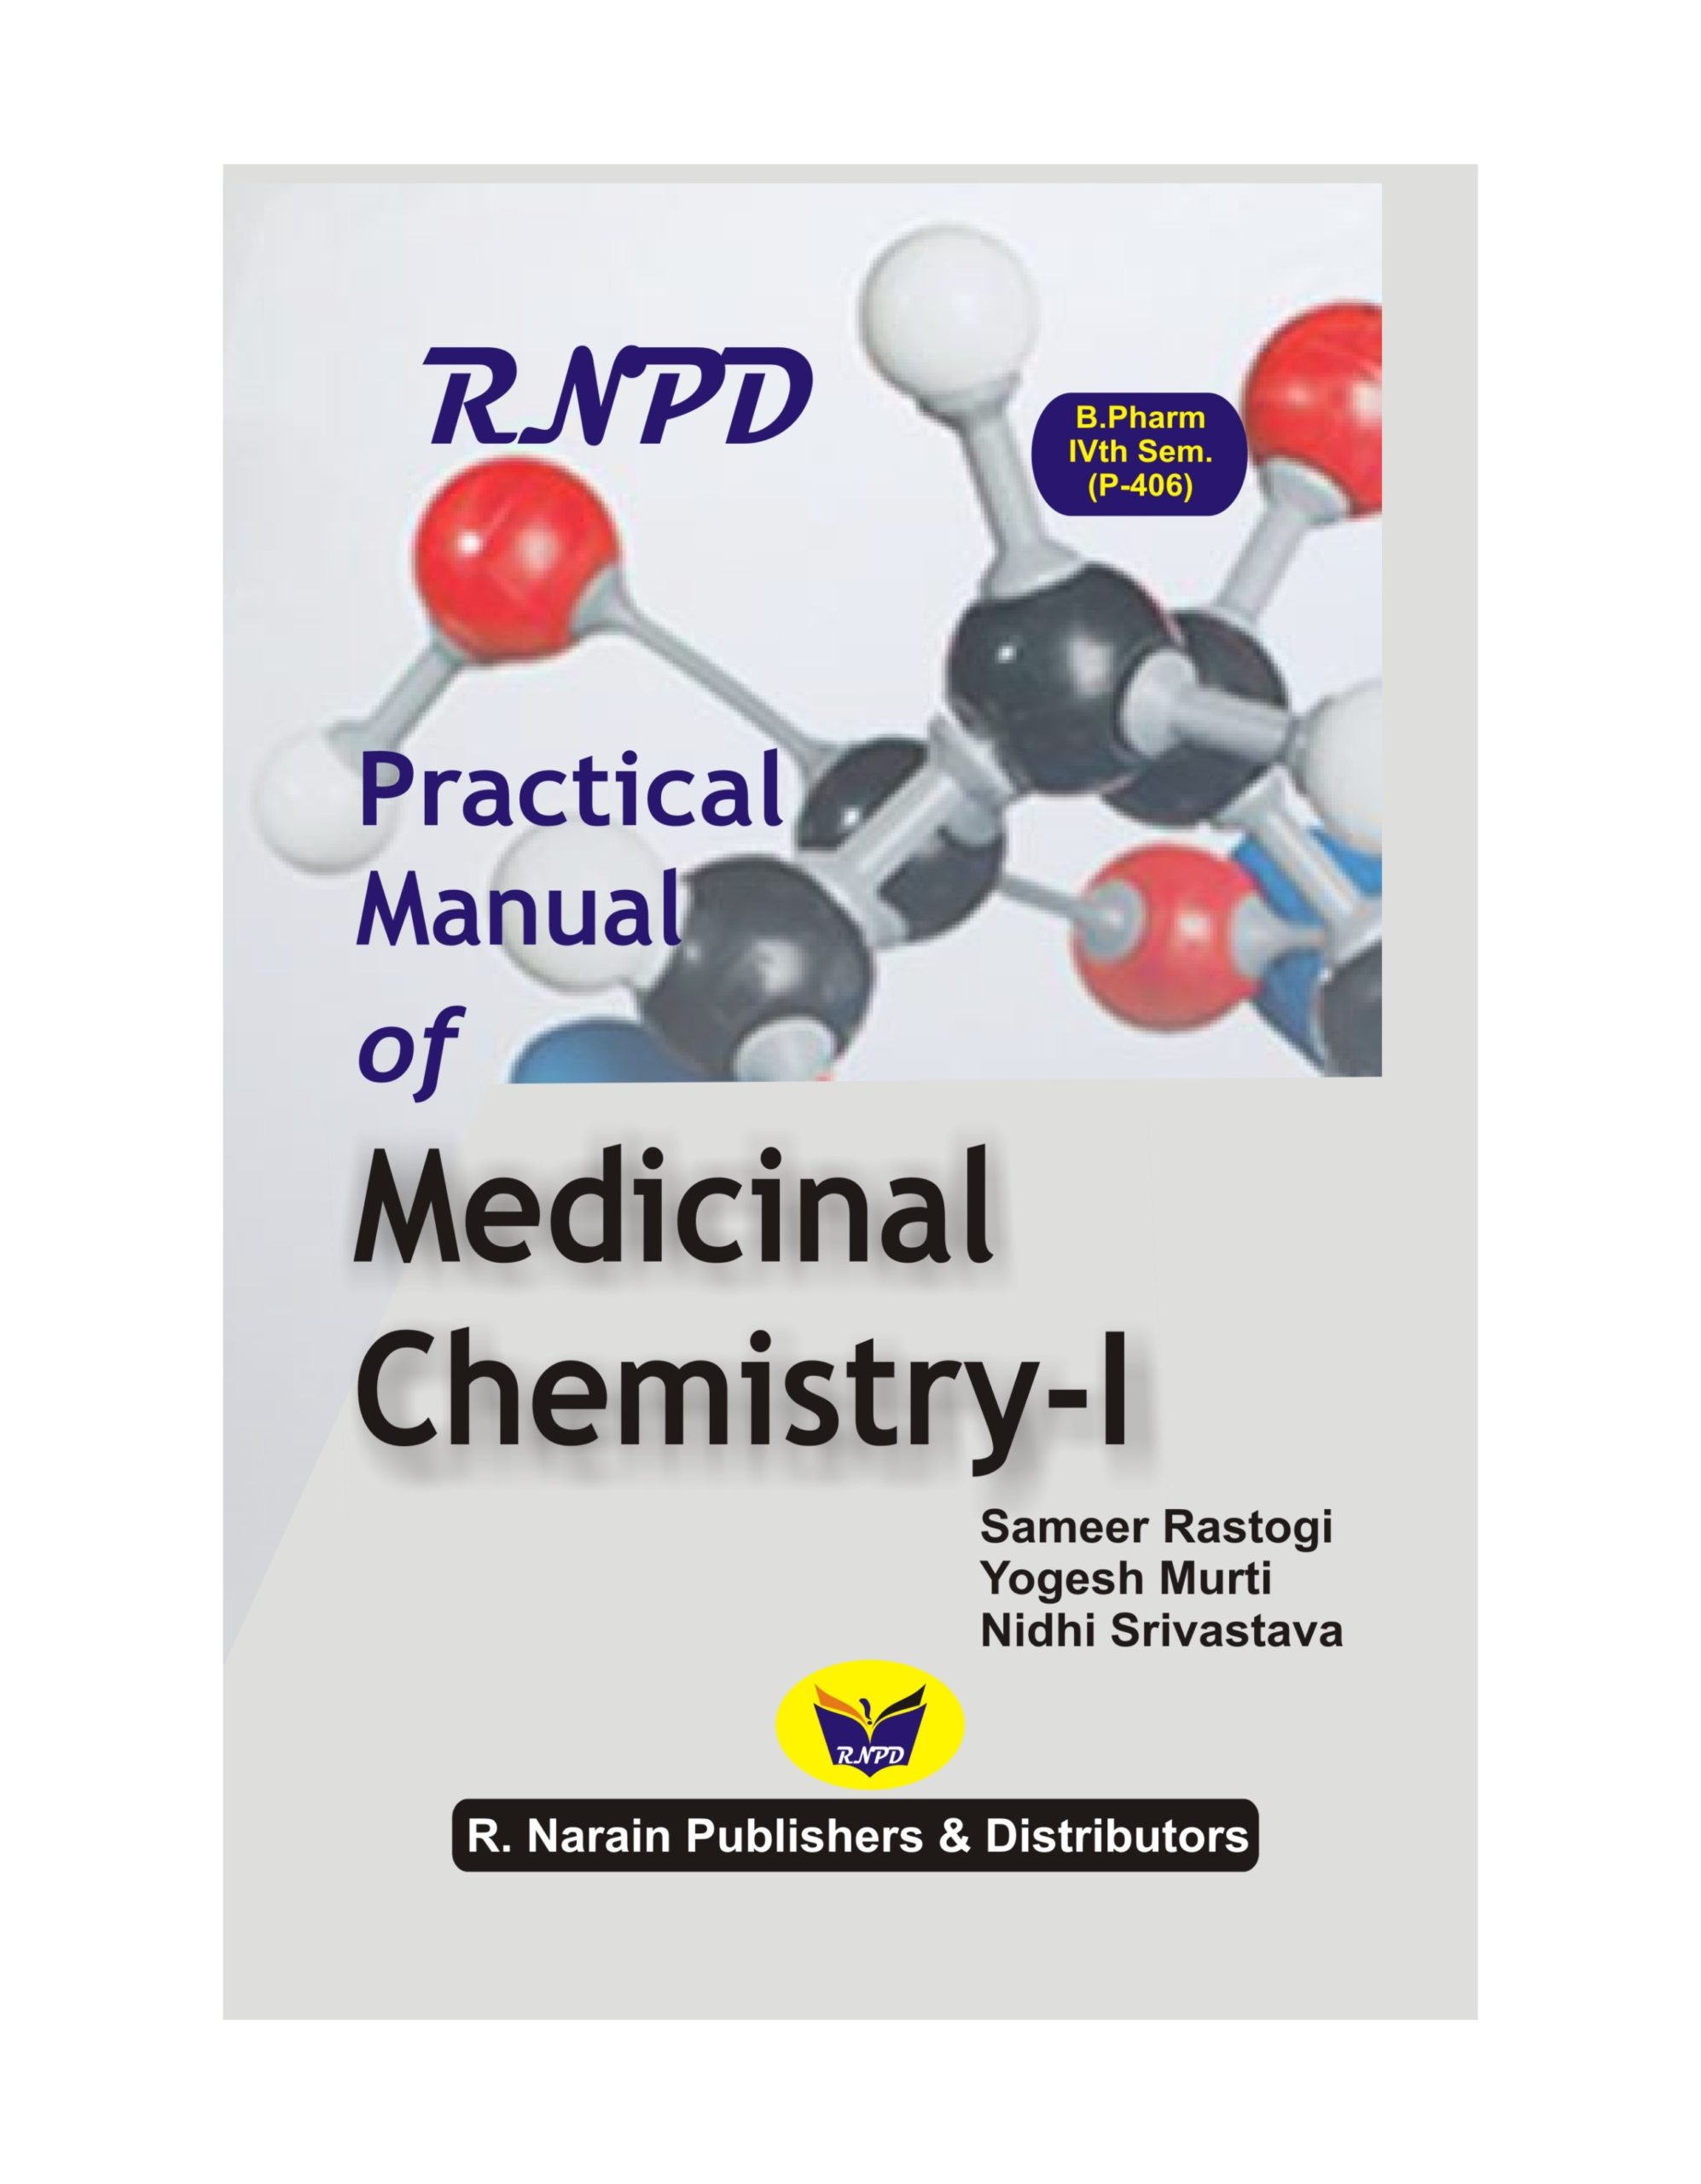 medicinal chemistry phd uk